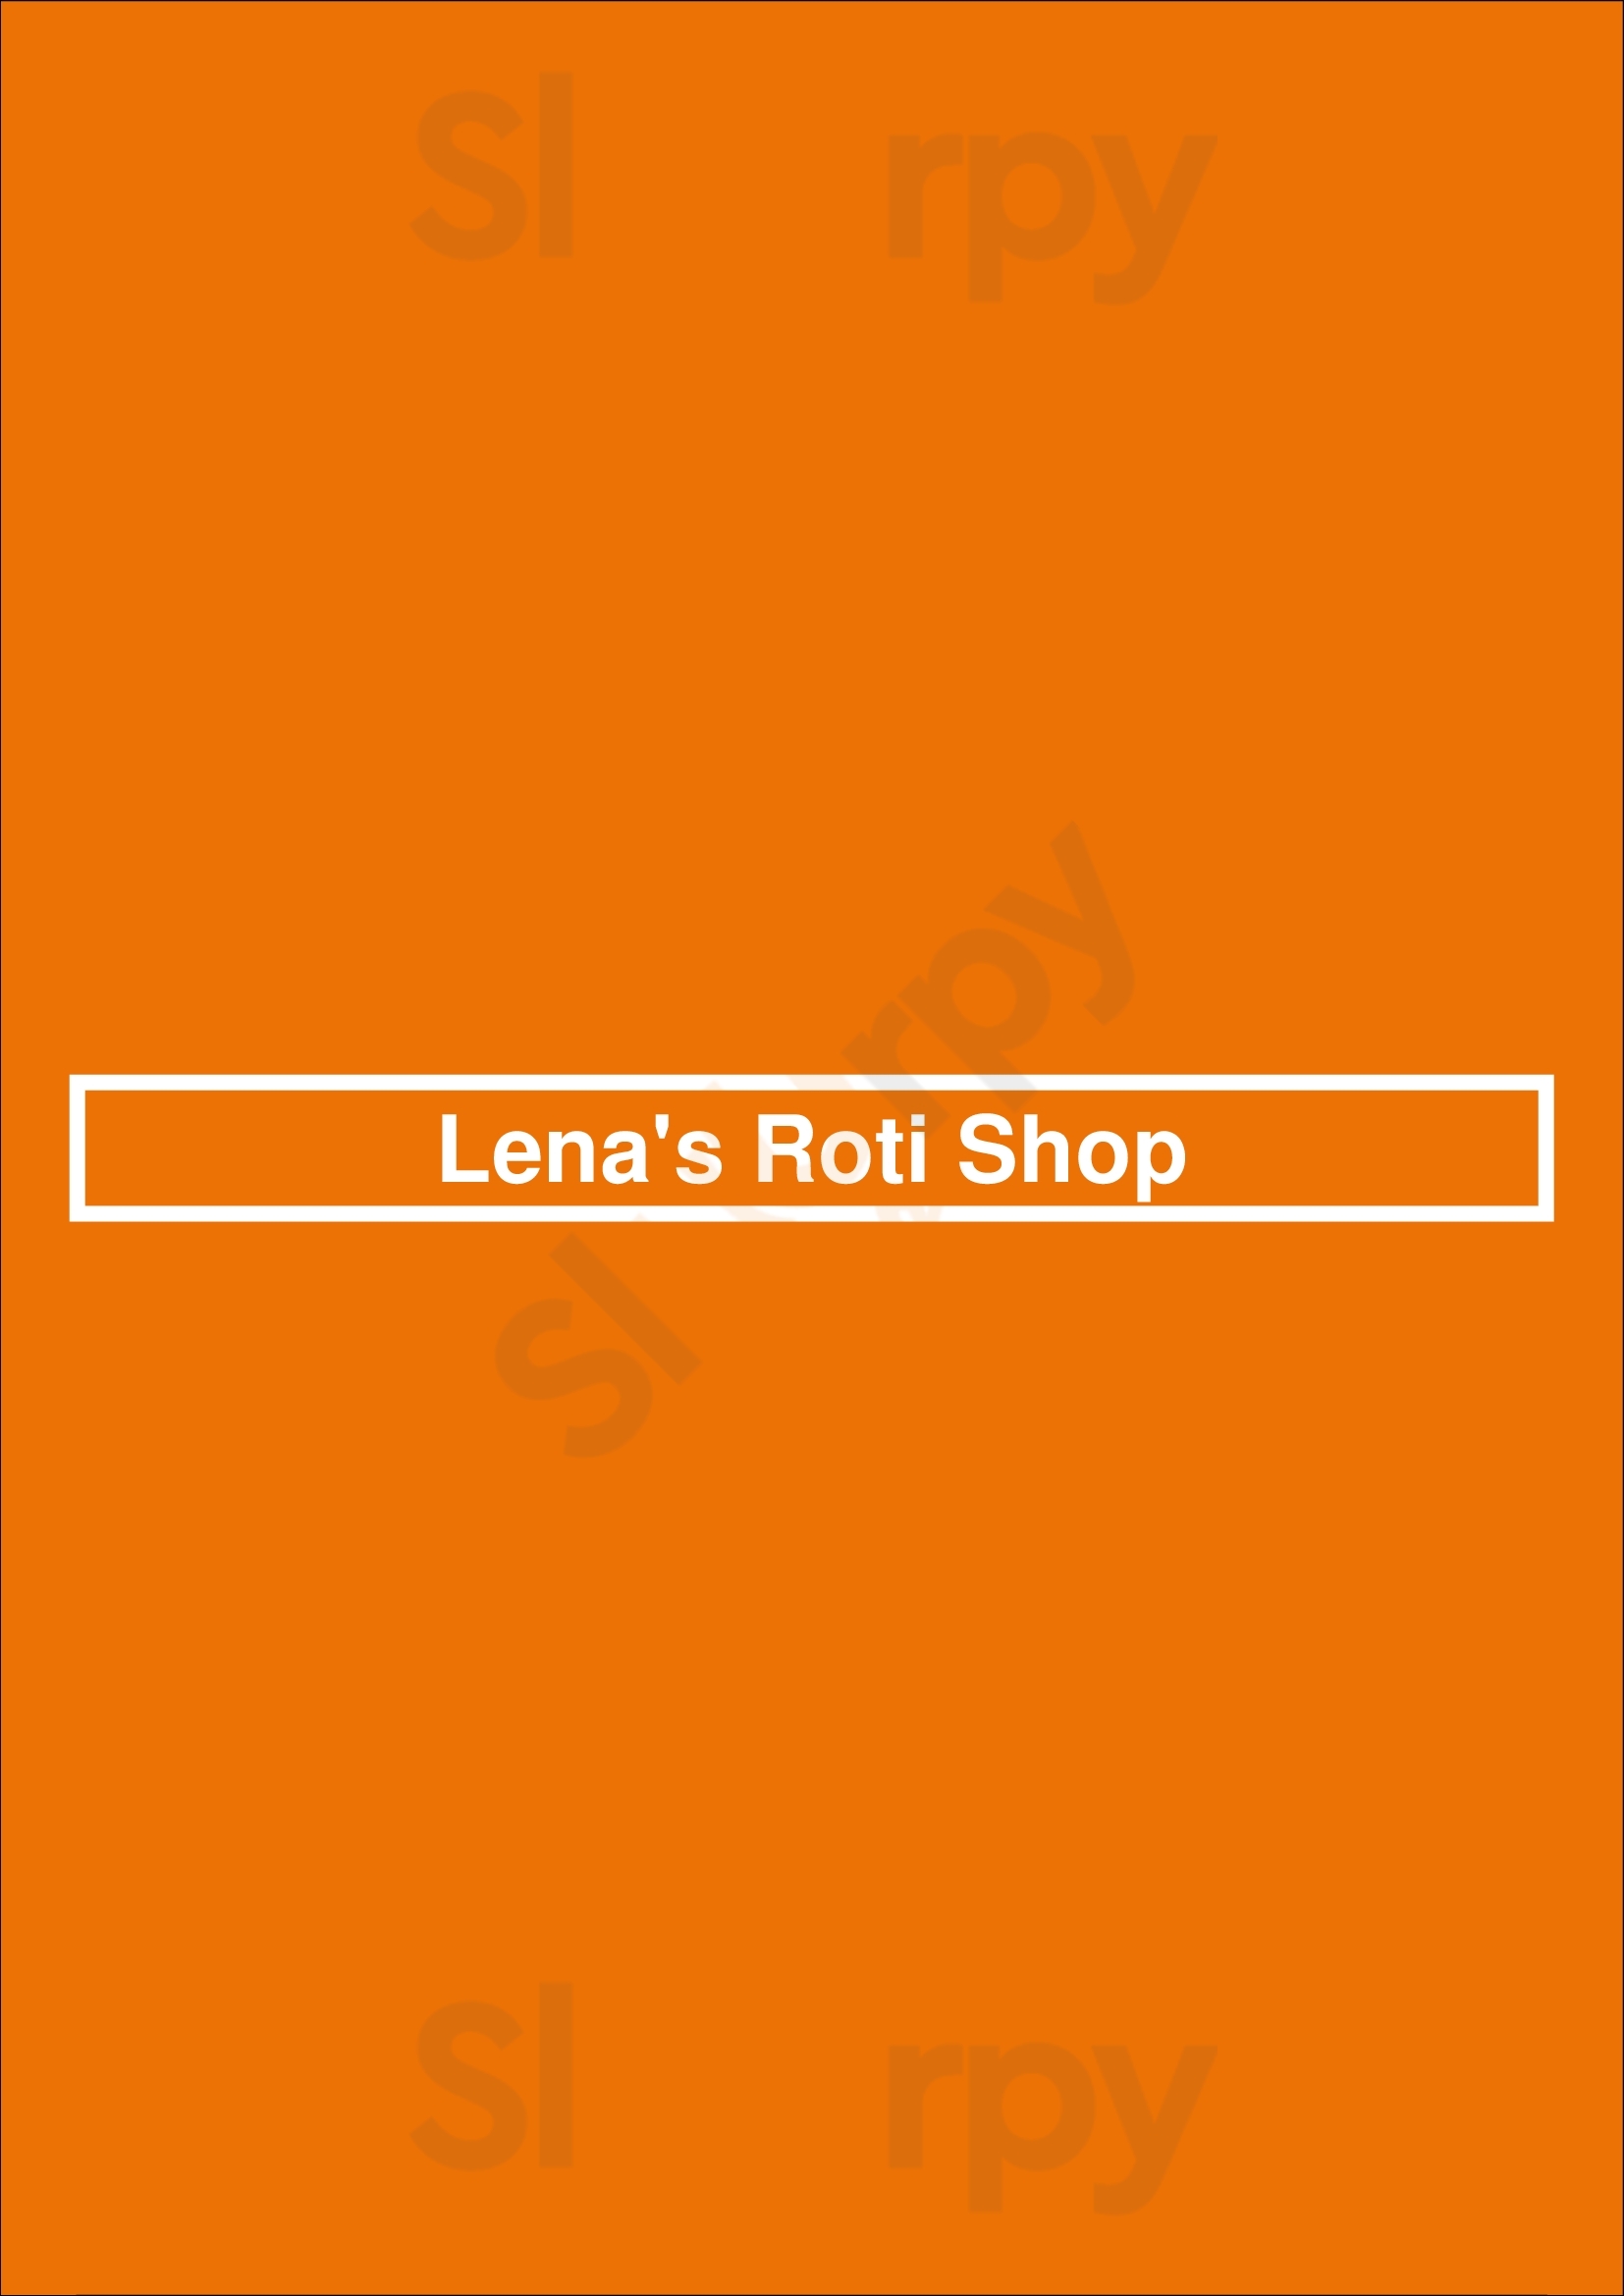 Lena's Roti Shop Mississauga Menu - 1